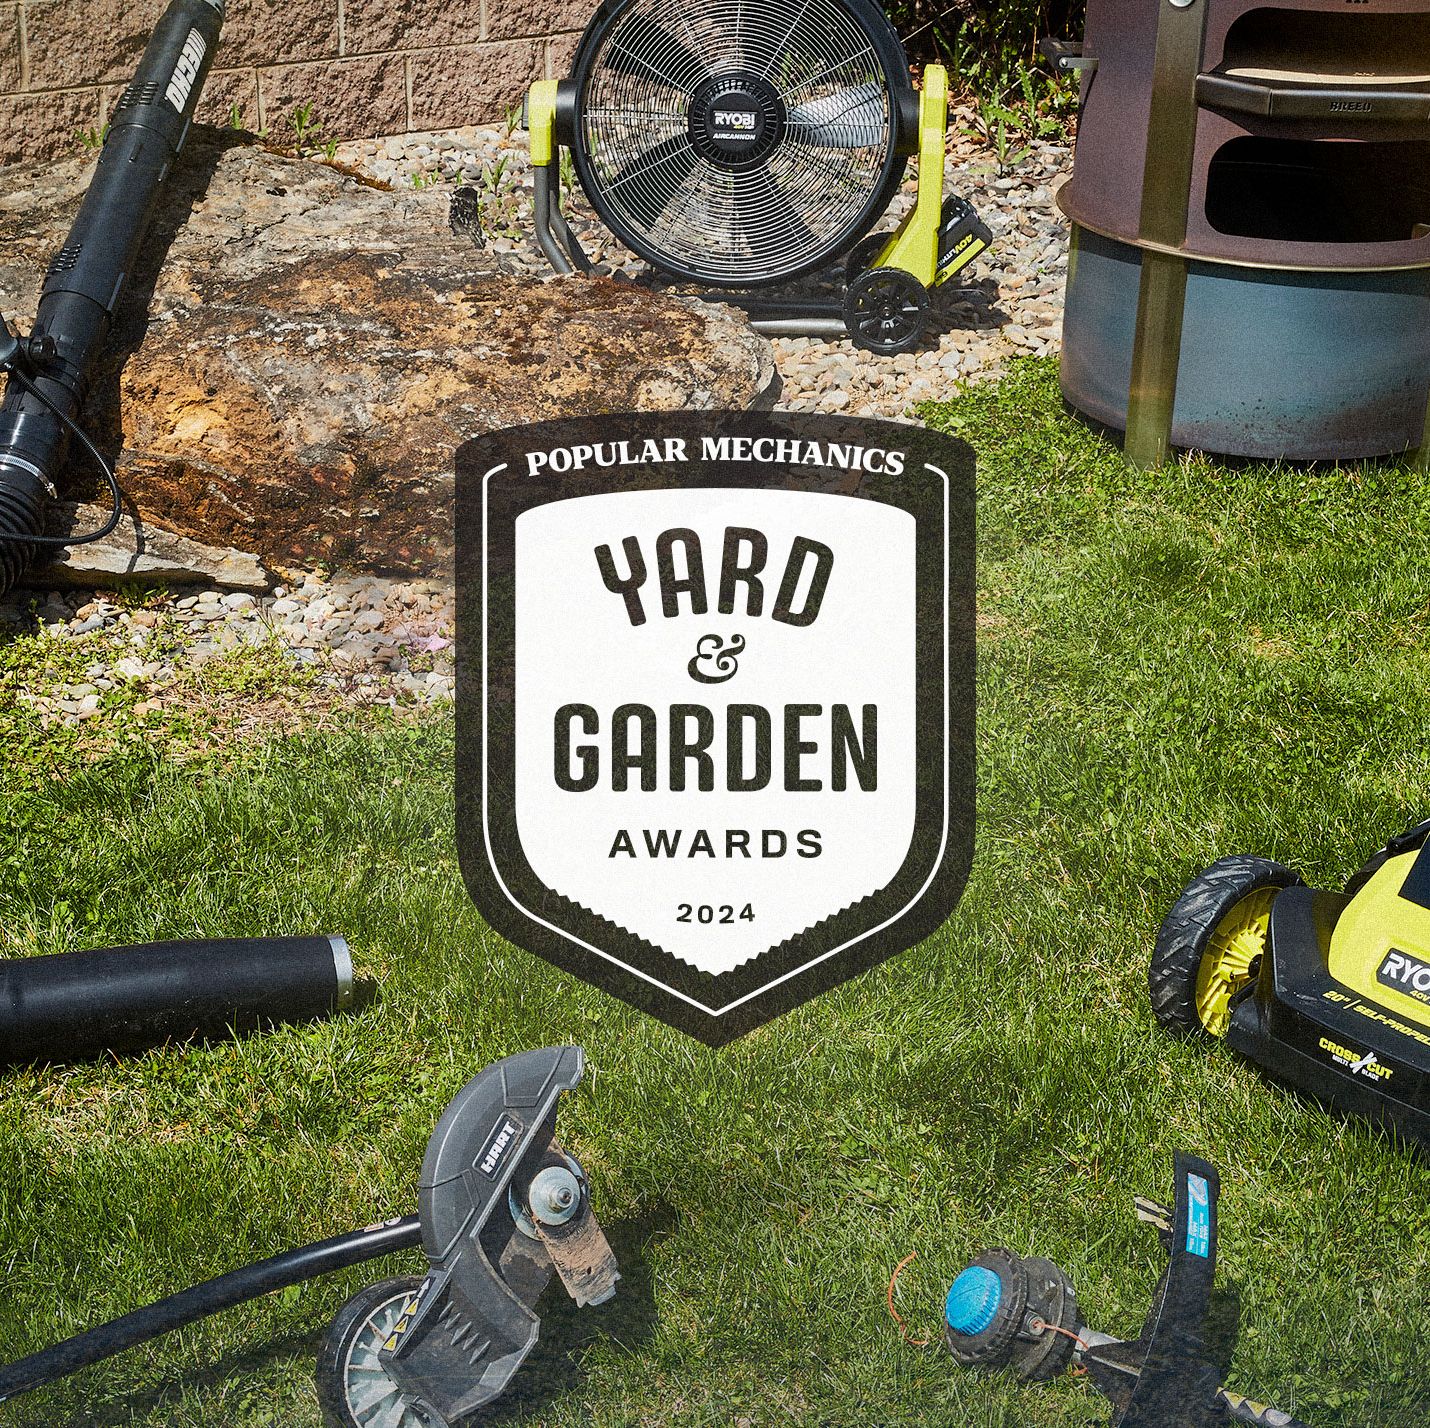 The 2024 Popular Mechanics Yard & Garden Awards